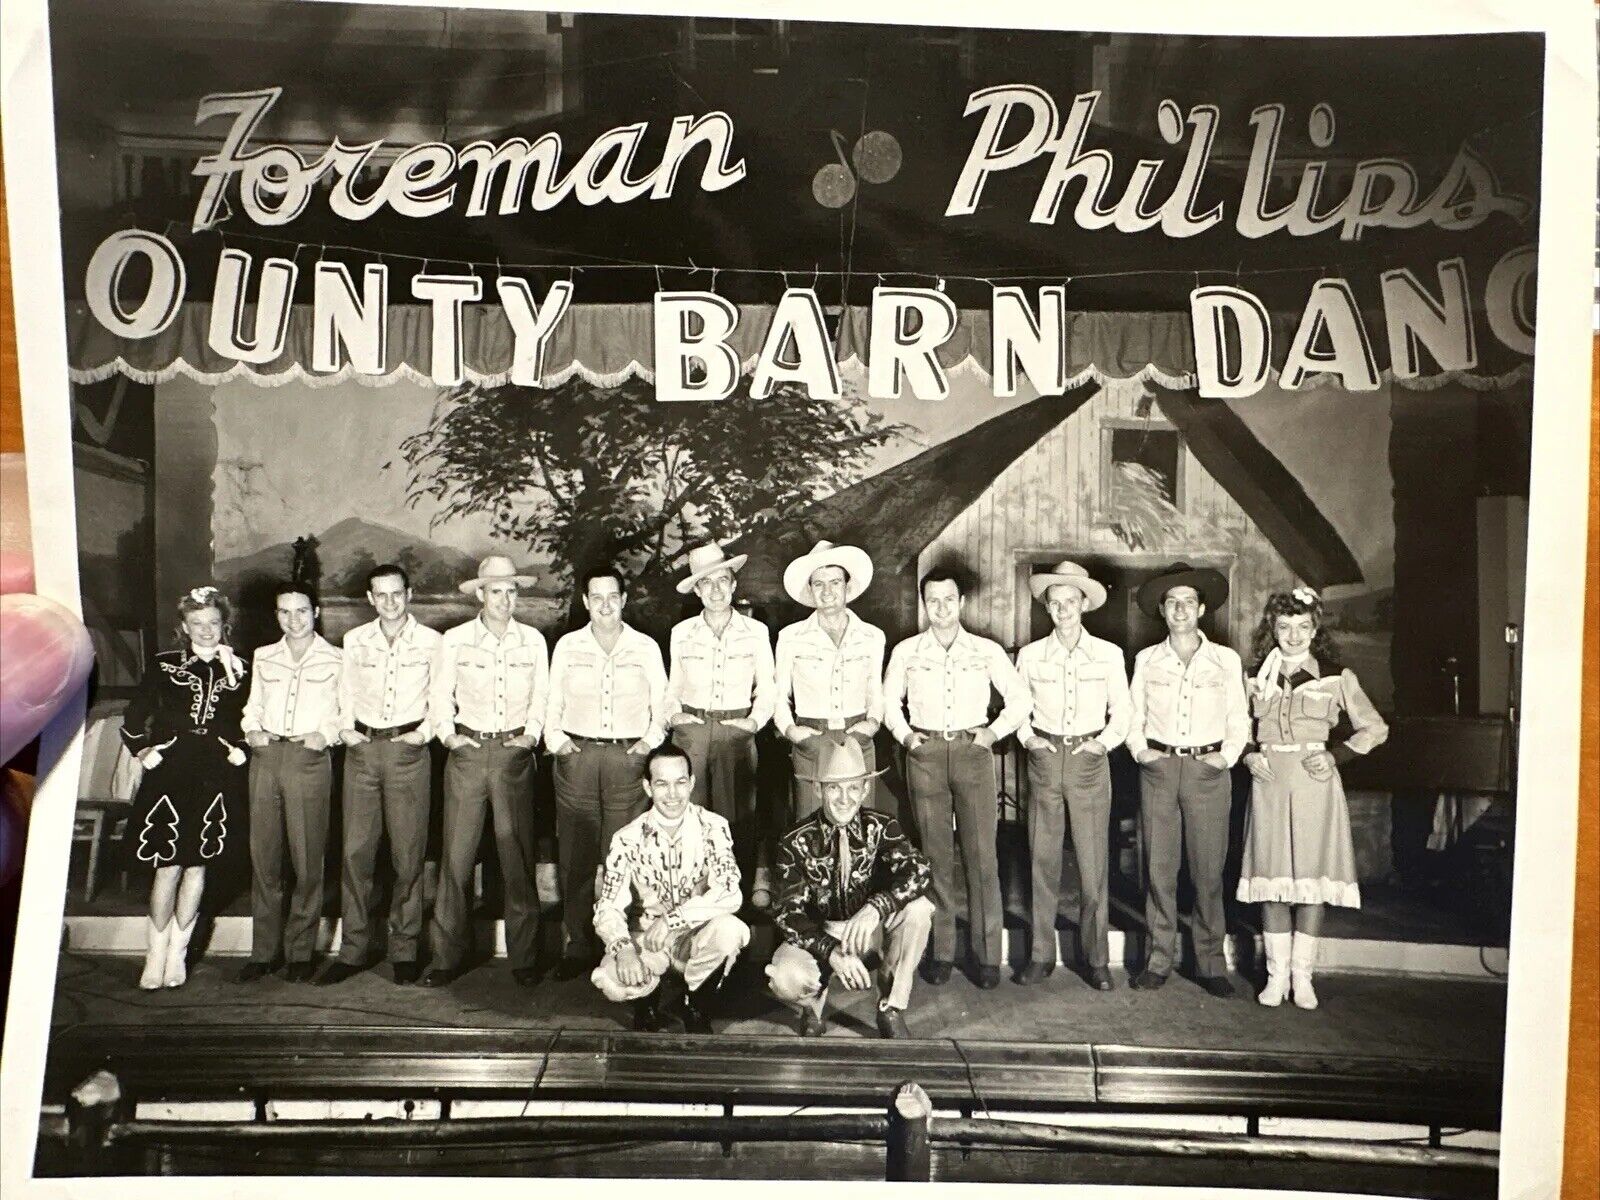 Spade Cooley’s Barn Dance Boys photo  Foreman Phillips County Vintage RARE